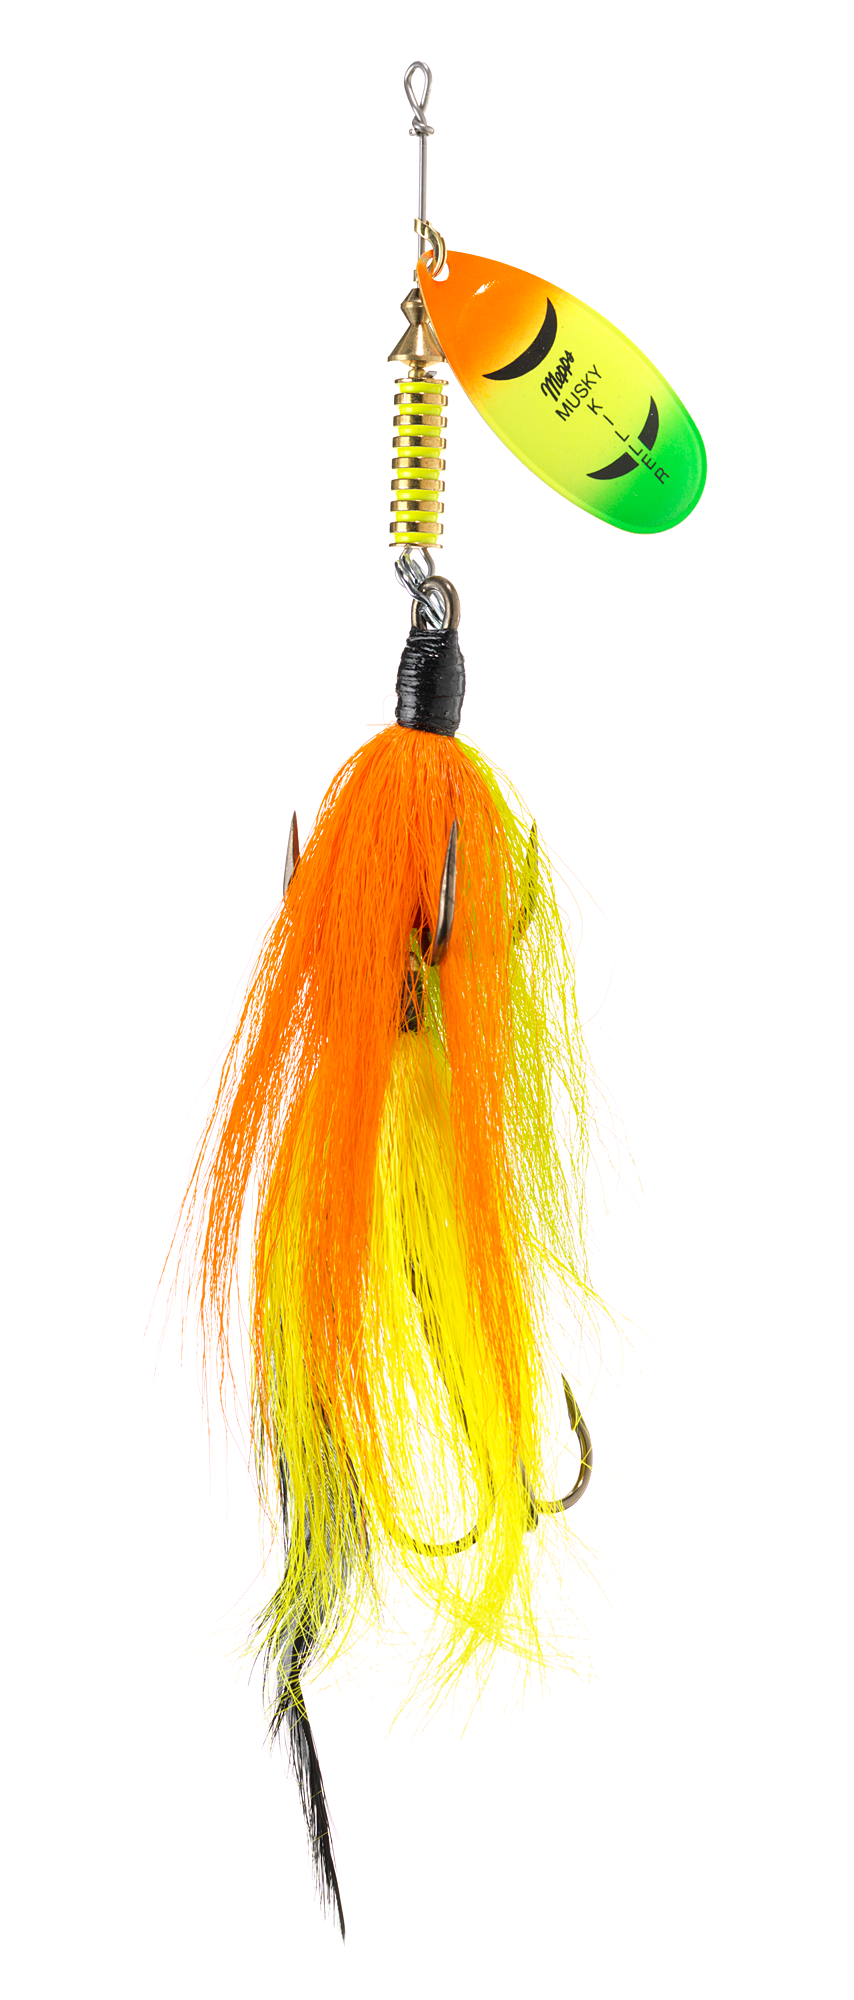 Giant Killer Mino 1-1/2 oz Rainbow Musky Bucktail by Mepps at Fleet Farm